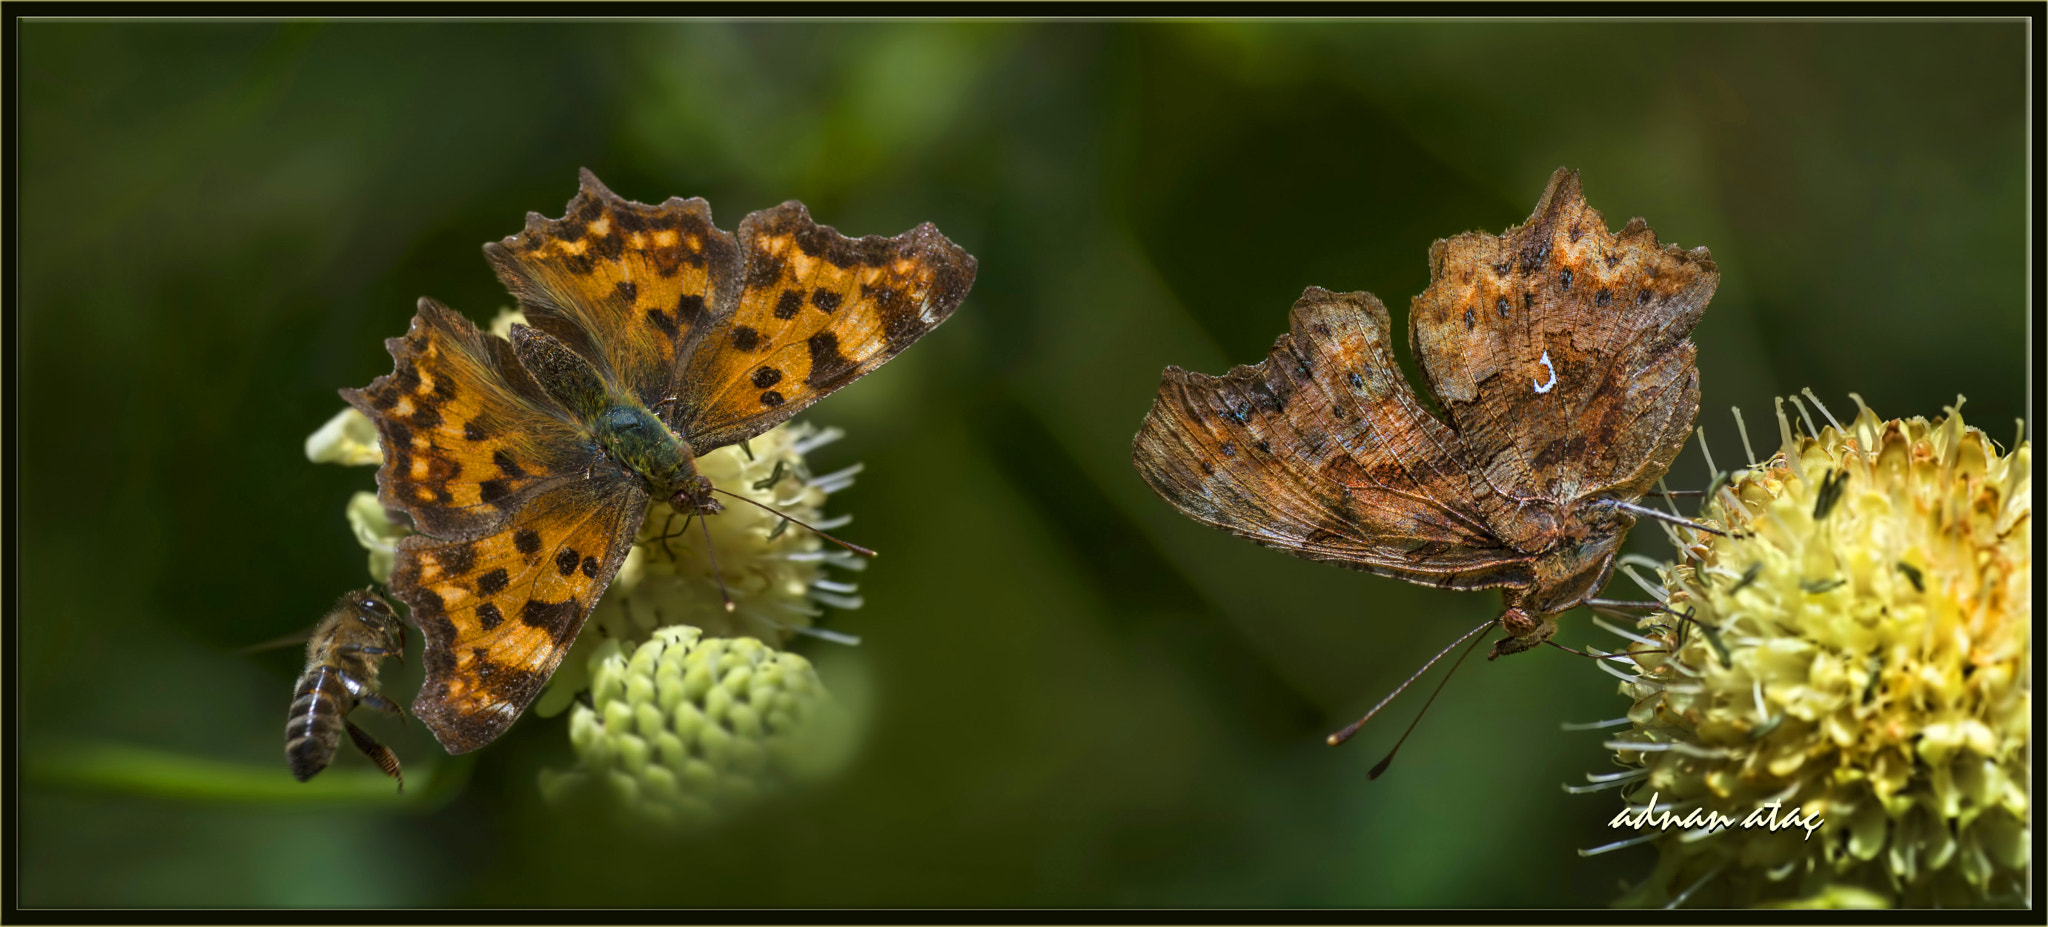 AF Zoom-Micro Nikkor 70-180mm f/4.5-5.6D ED sample photo. Yırtık pırtık kelebeği - polygonia c-album - comma butterfly photography